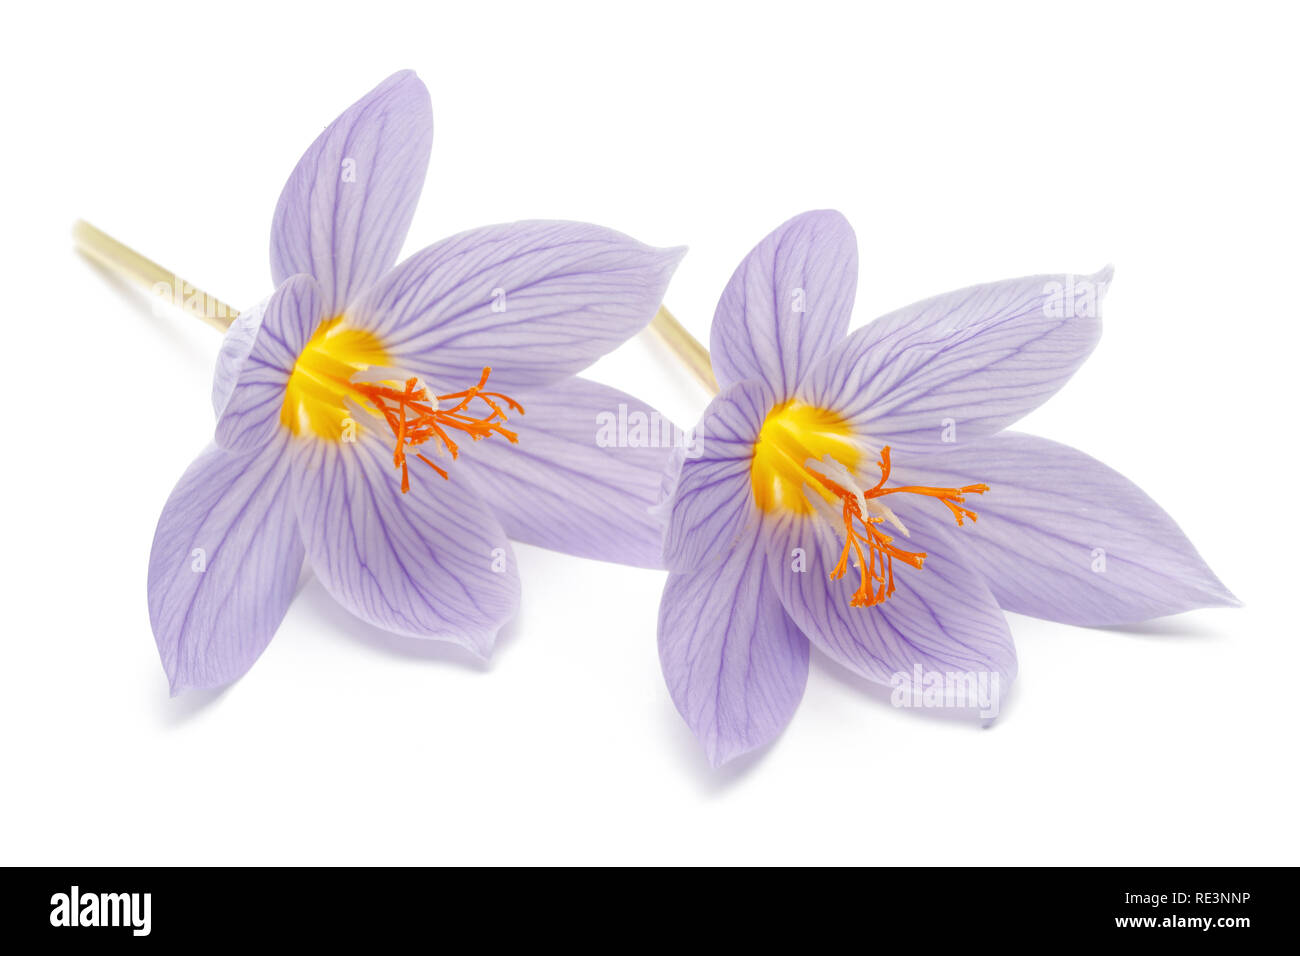 Crocus flowers isolated on white background Stock Photo